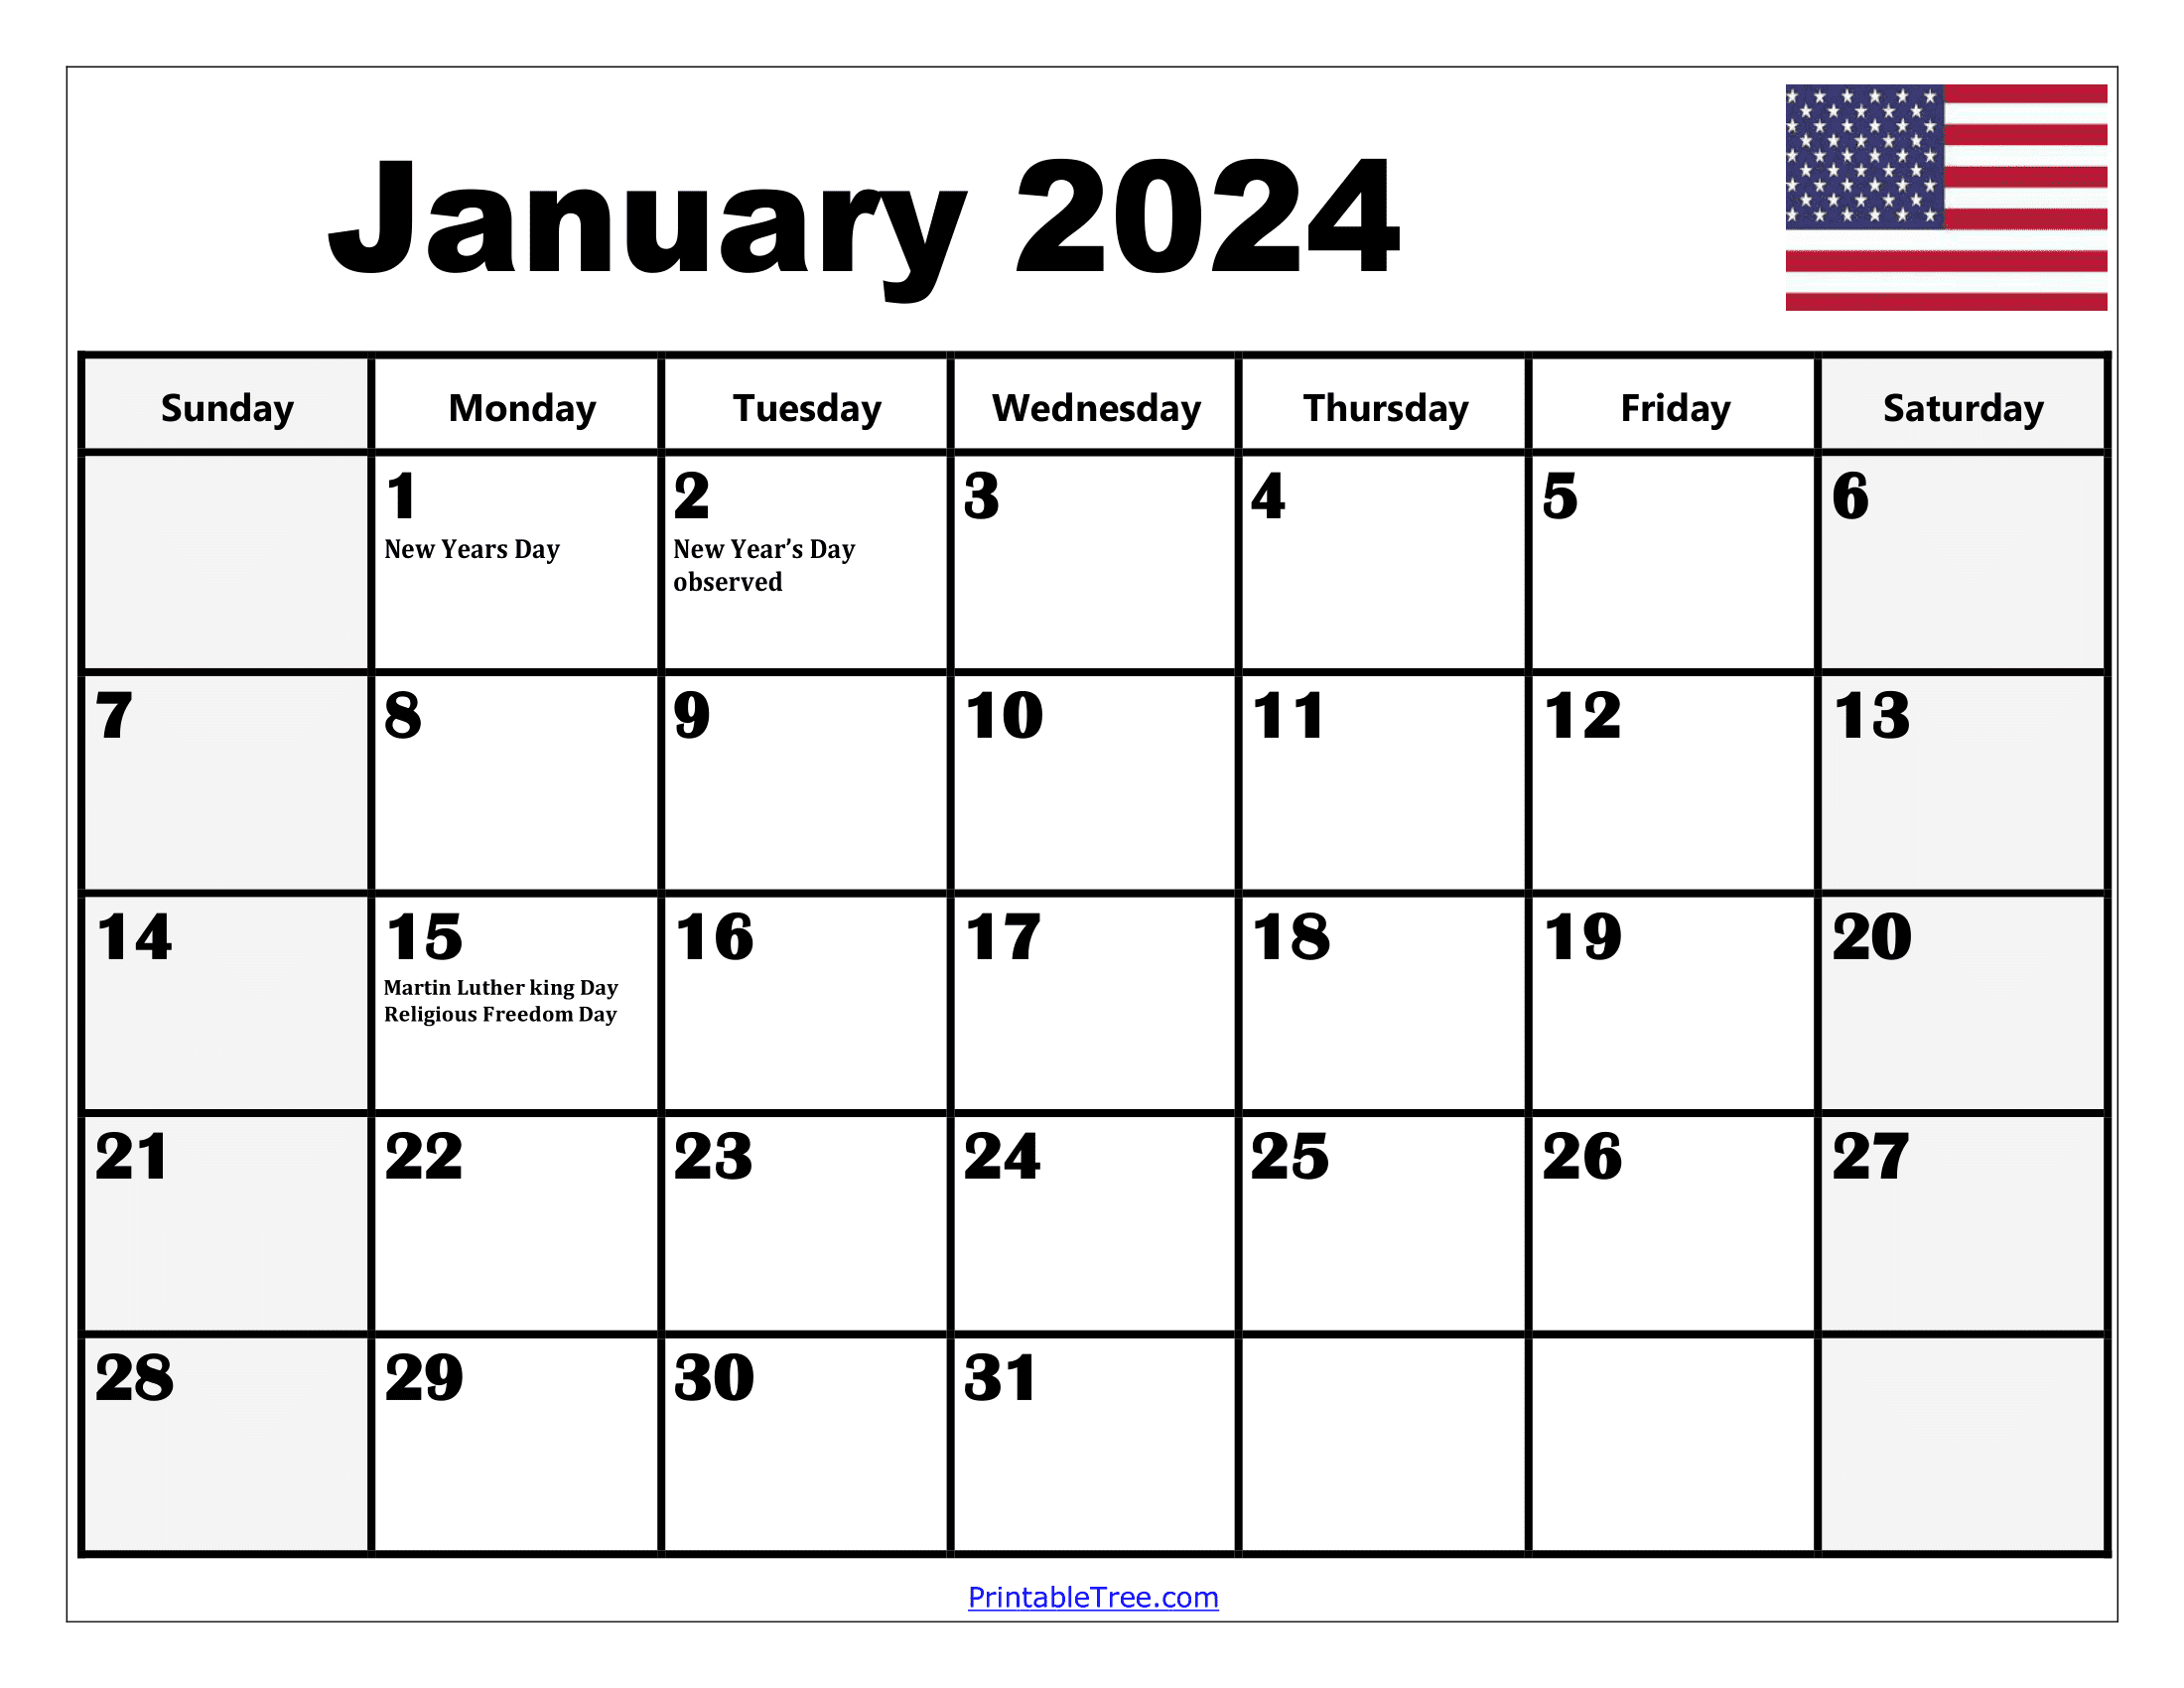 January 2024 Calendar Printable Pdf Template With Holidays for January 2024 Free Printable Calendar With Holidays